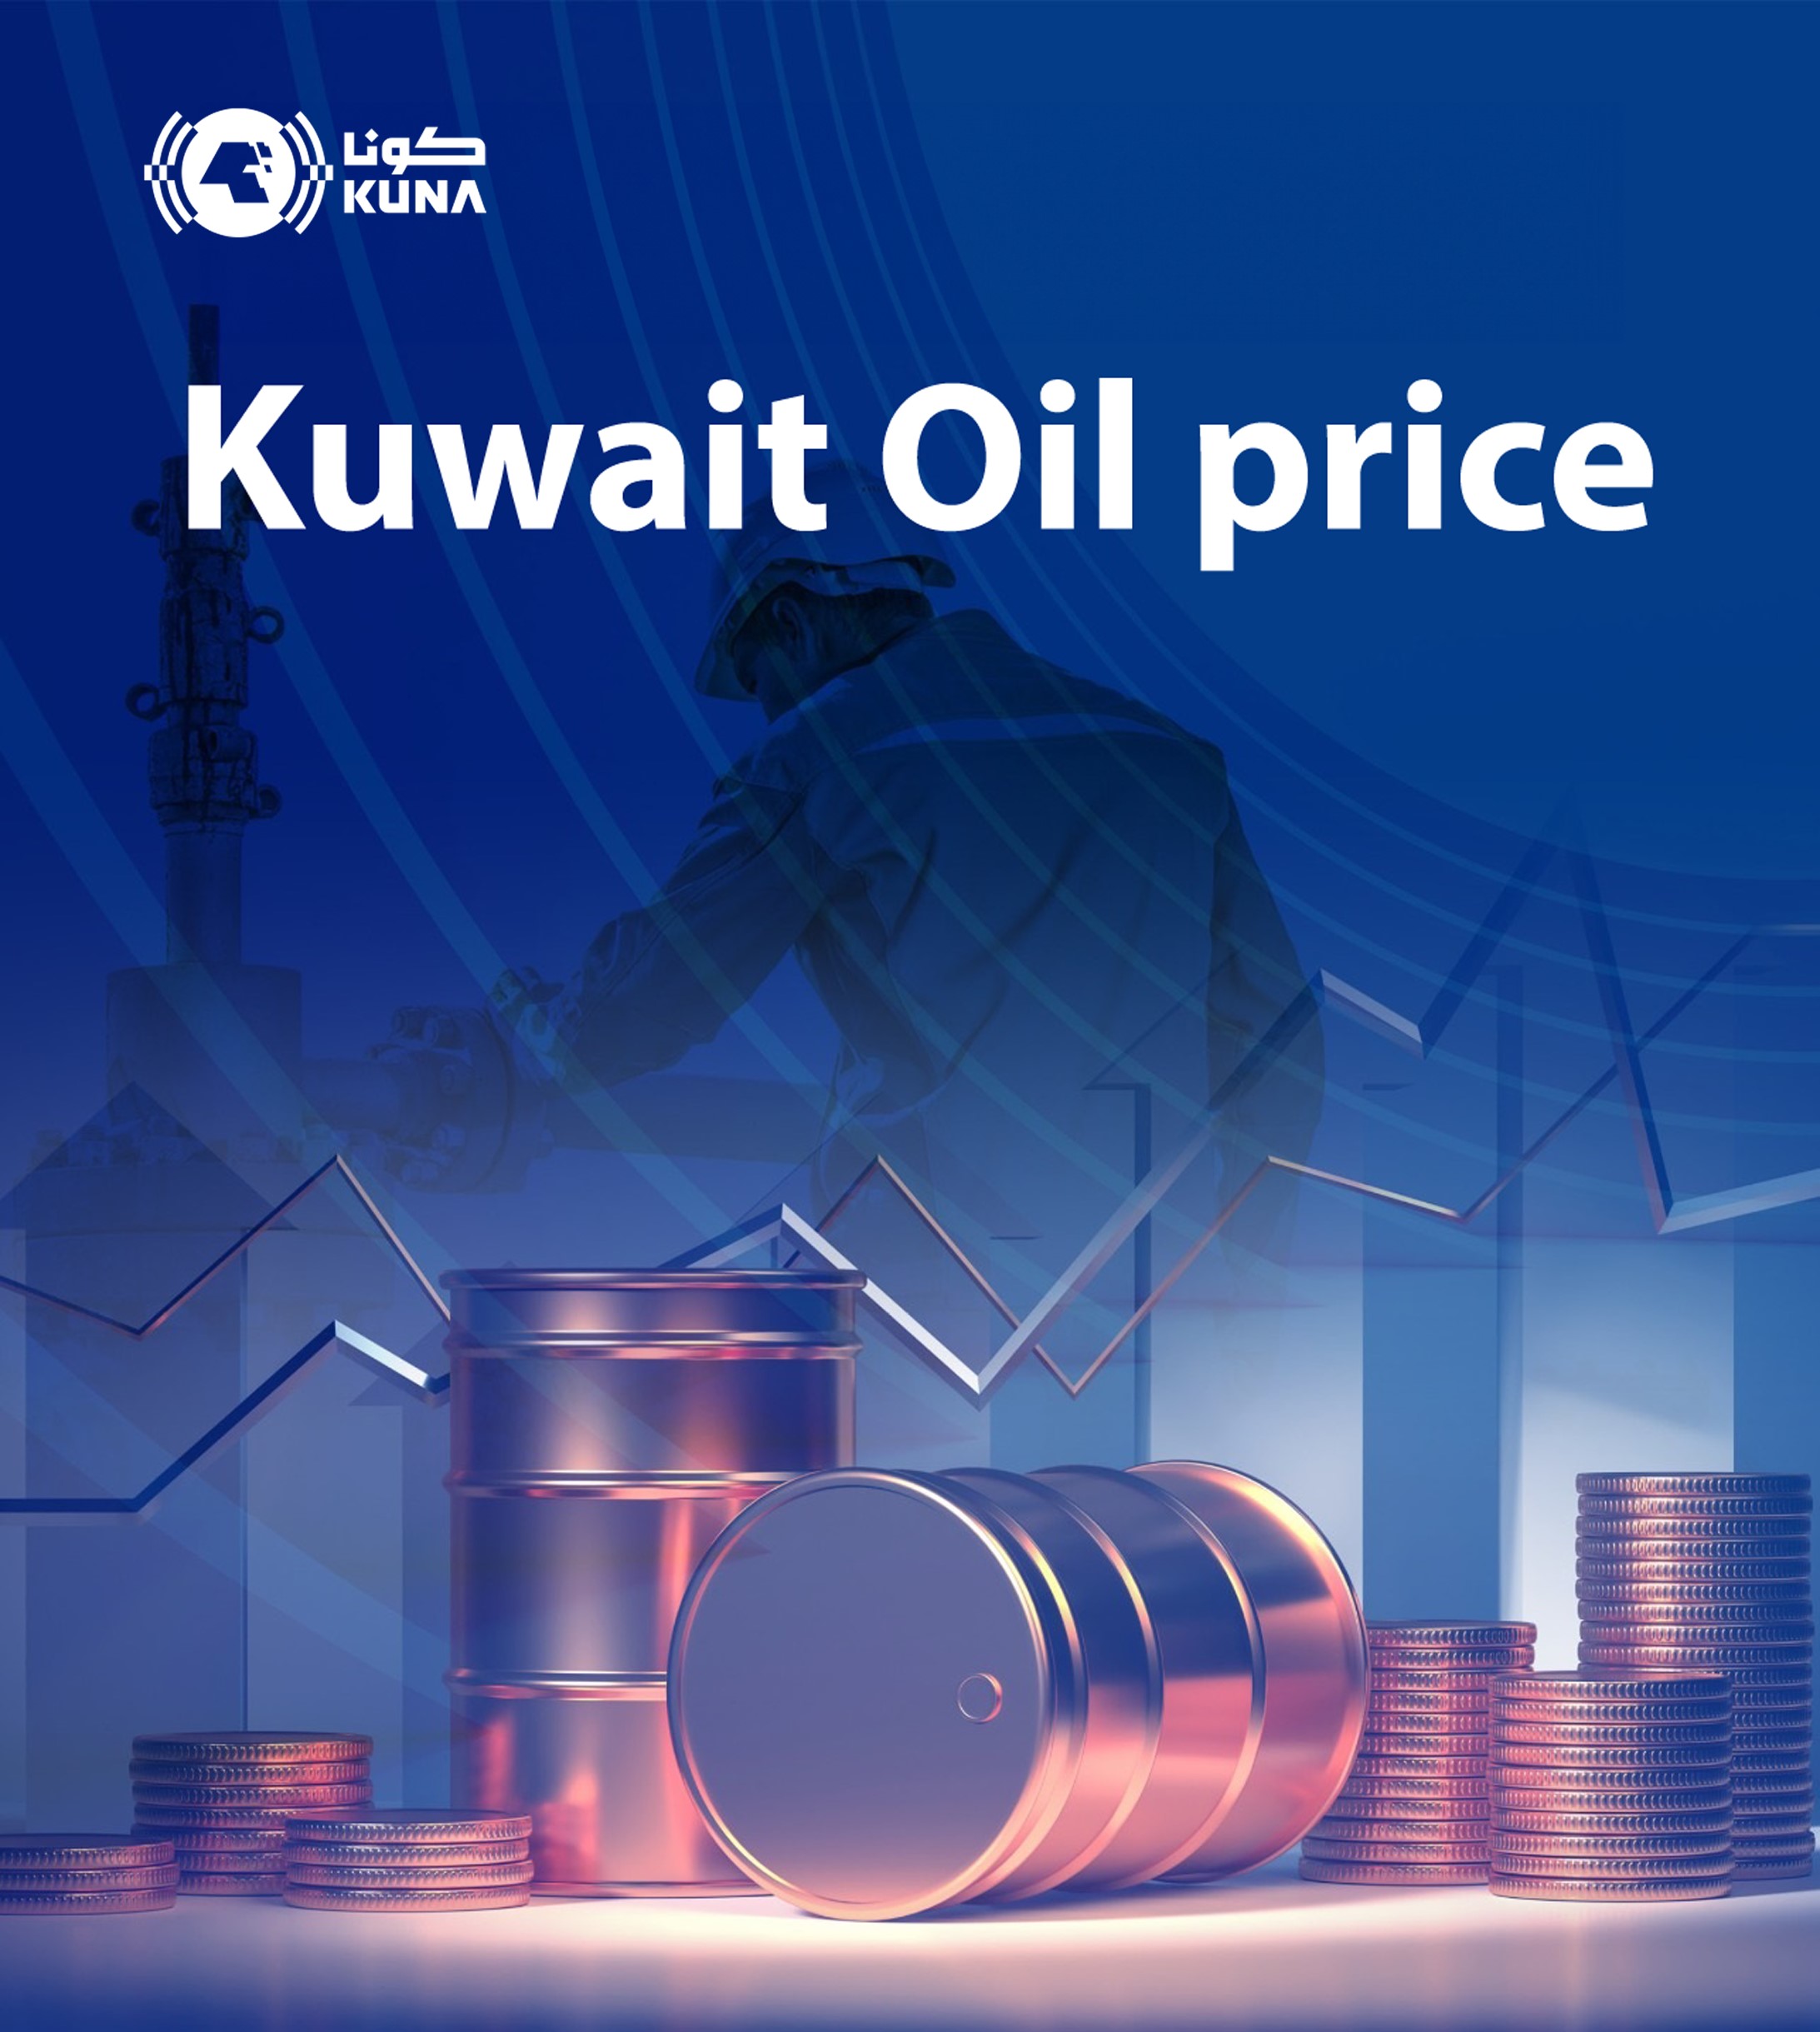 Kuwaiti oil price up 21 cents to USD 90.21 pb                                                                                                                                                                                                             